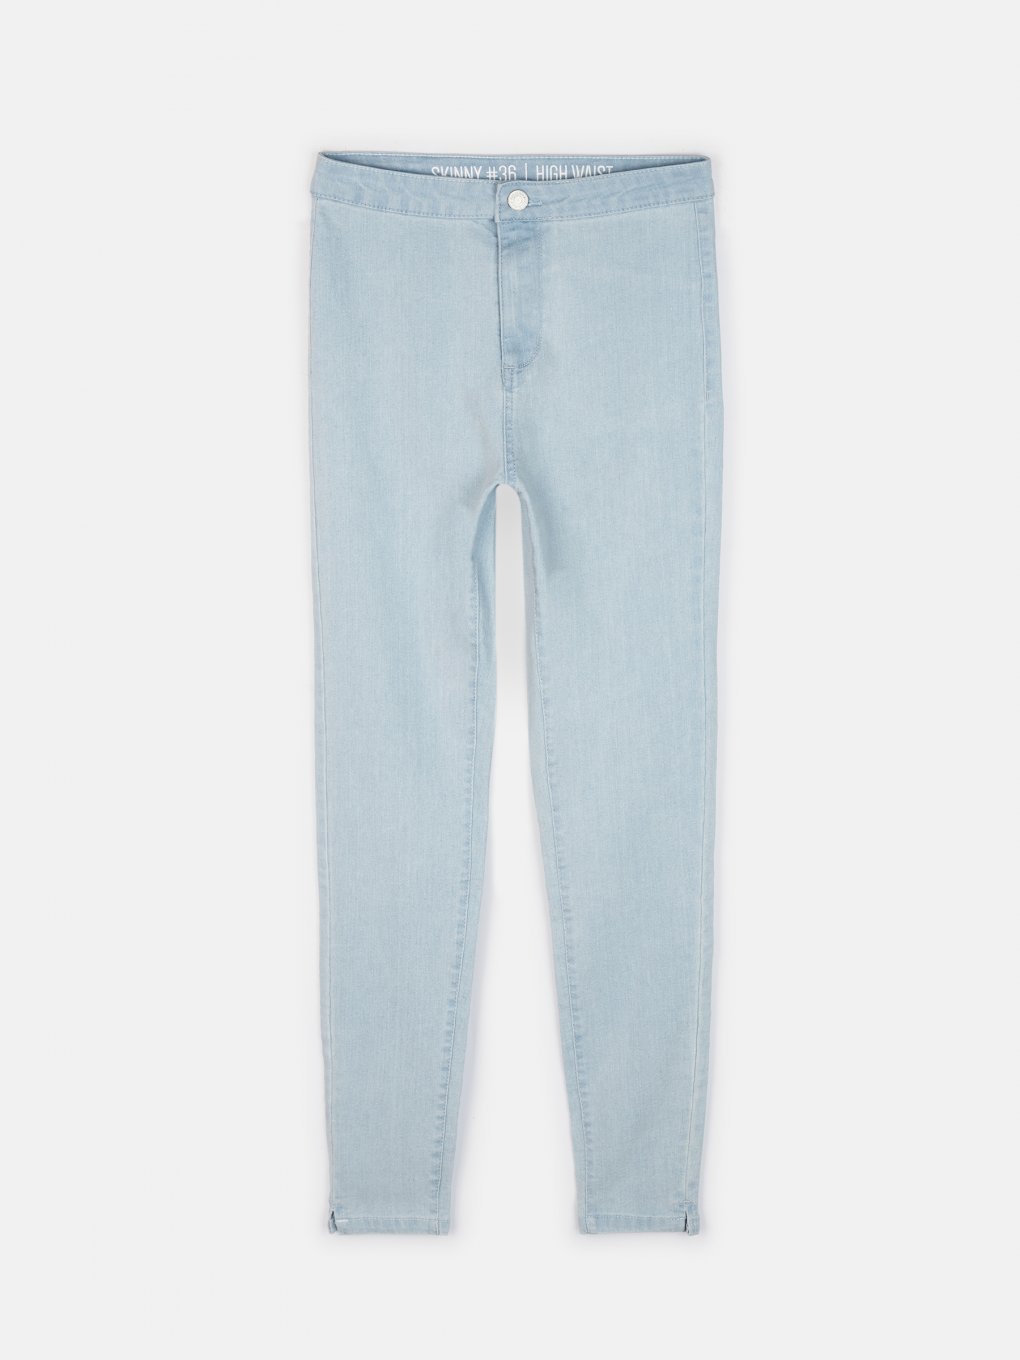 discount 79% Stradivarius shorts jeans WOMEN FASHION Jeans Print Gray/White 34                  EU 